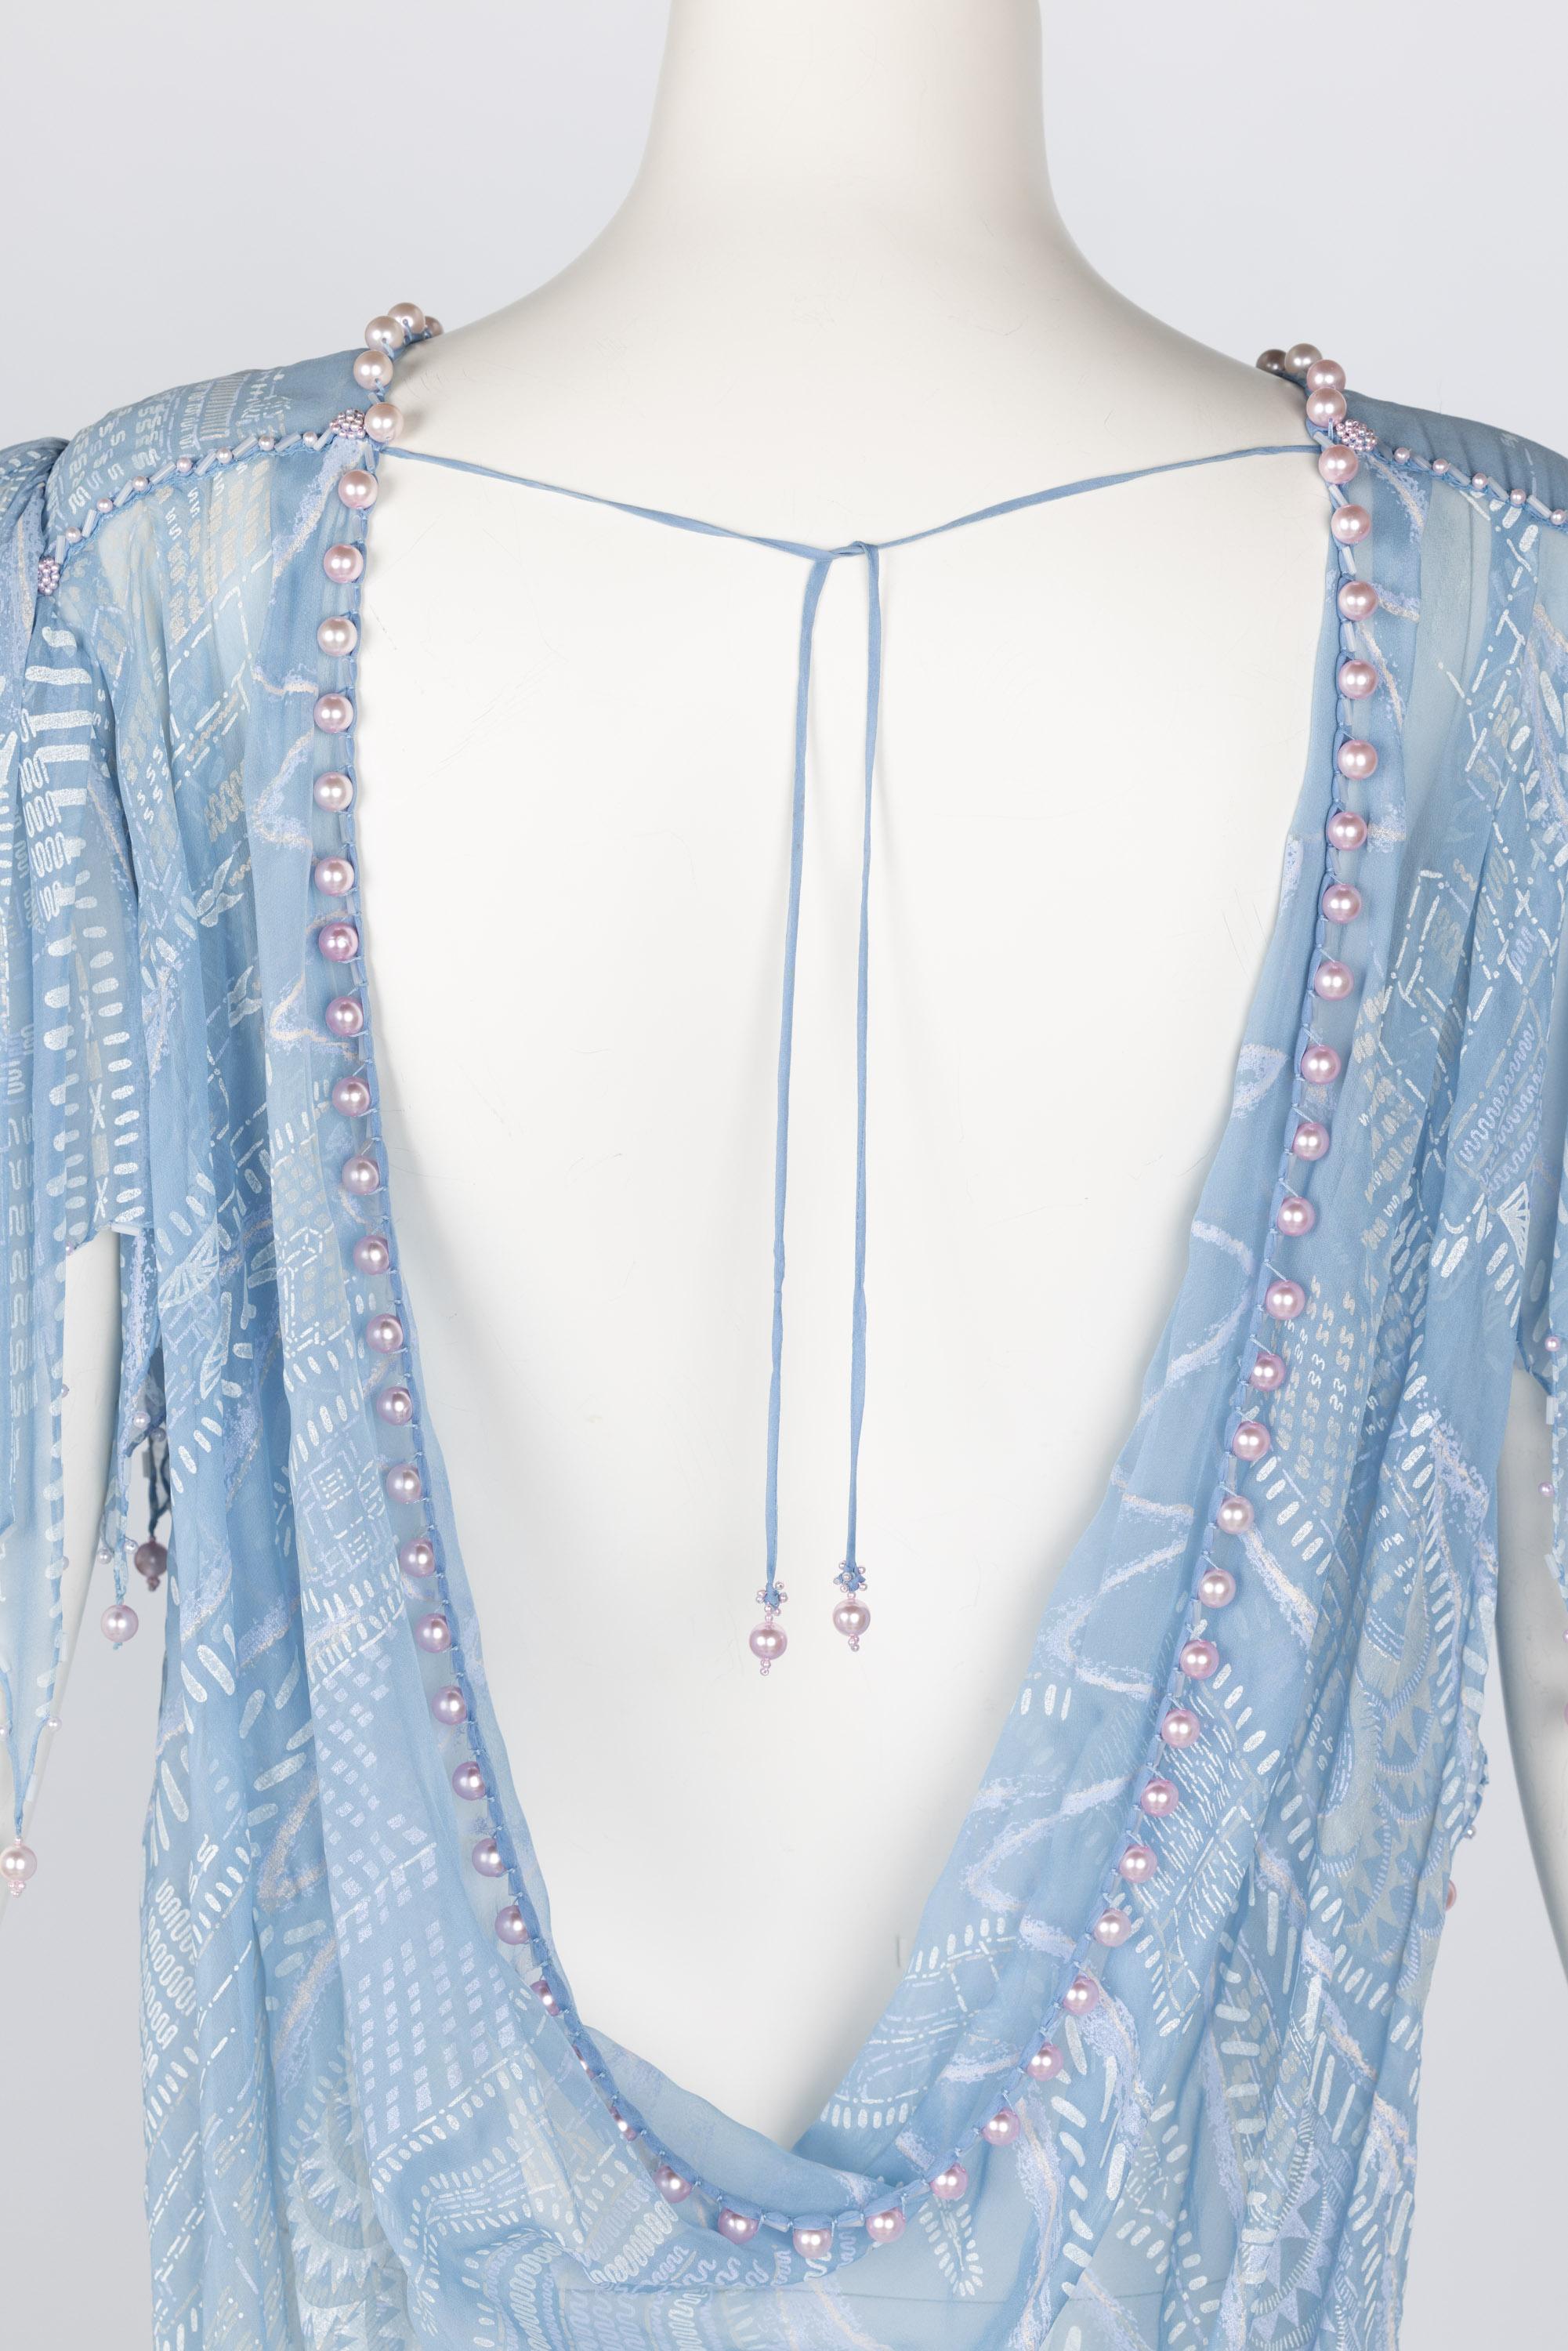 Zandra Rhodes Light Blue Hand Printed Sheer Silk Pearl Beaded Dress Museum Piece For Sale 5